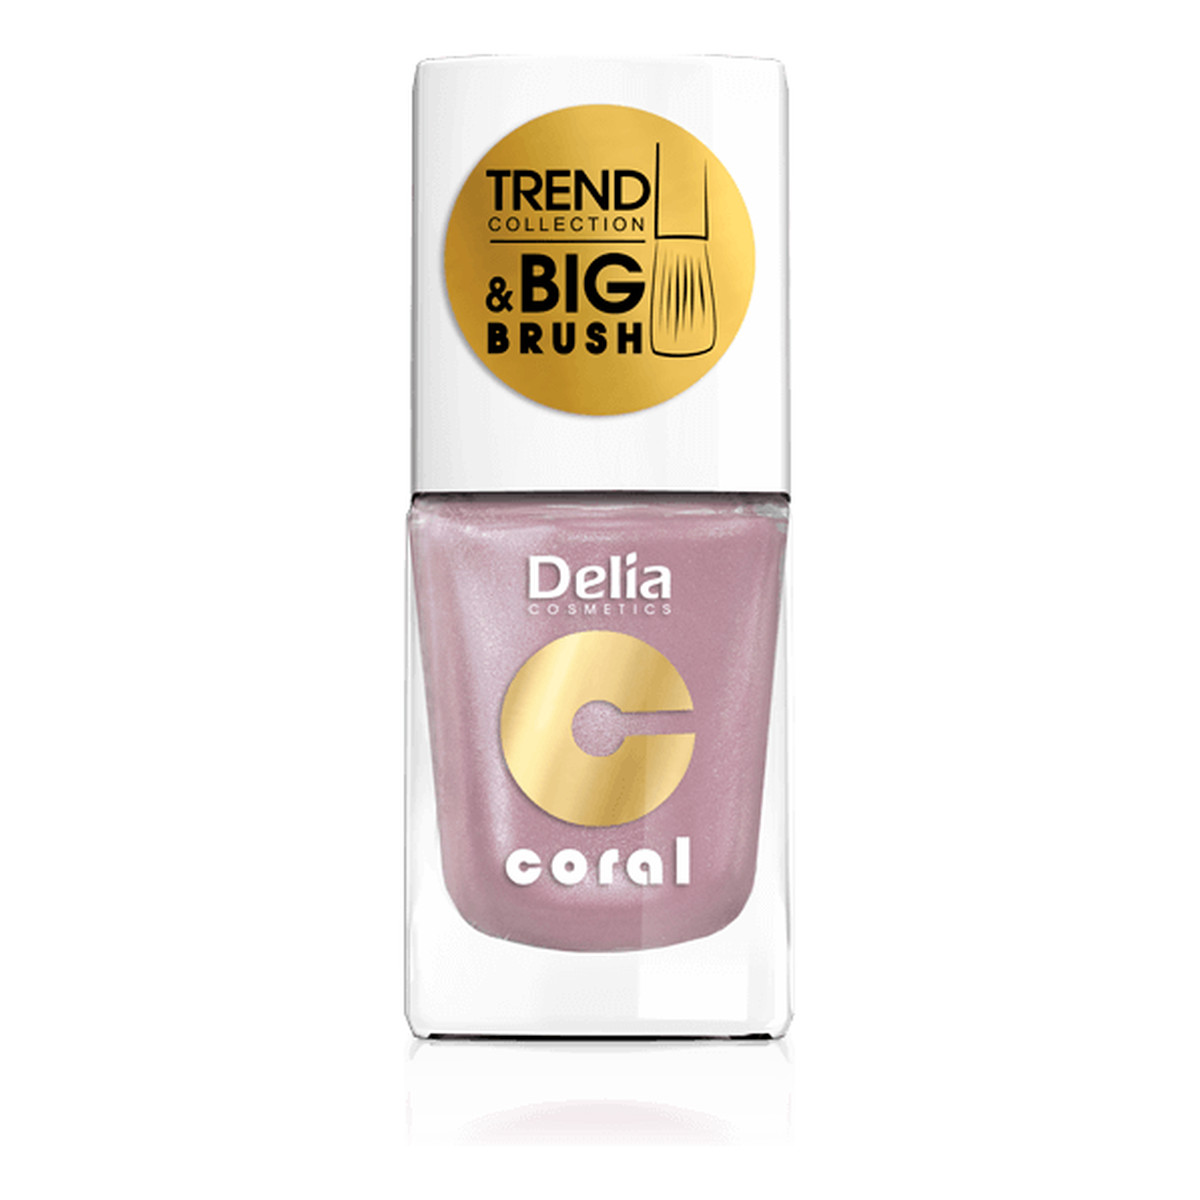 Delia Trend Collection Big & Brush Lakier do paznokci 11ml